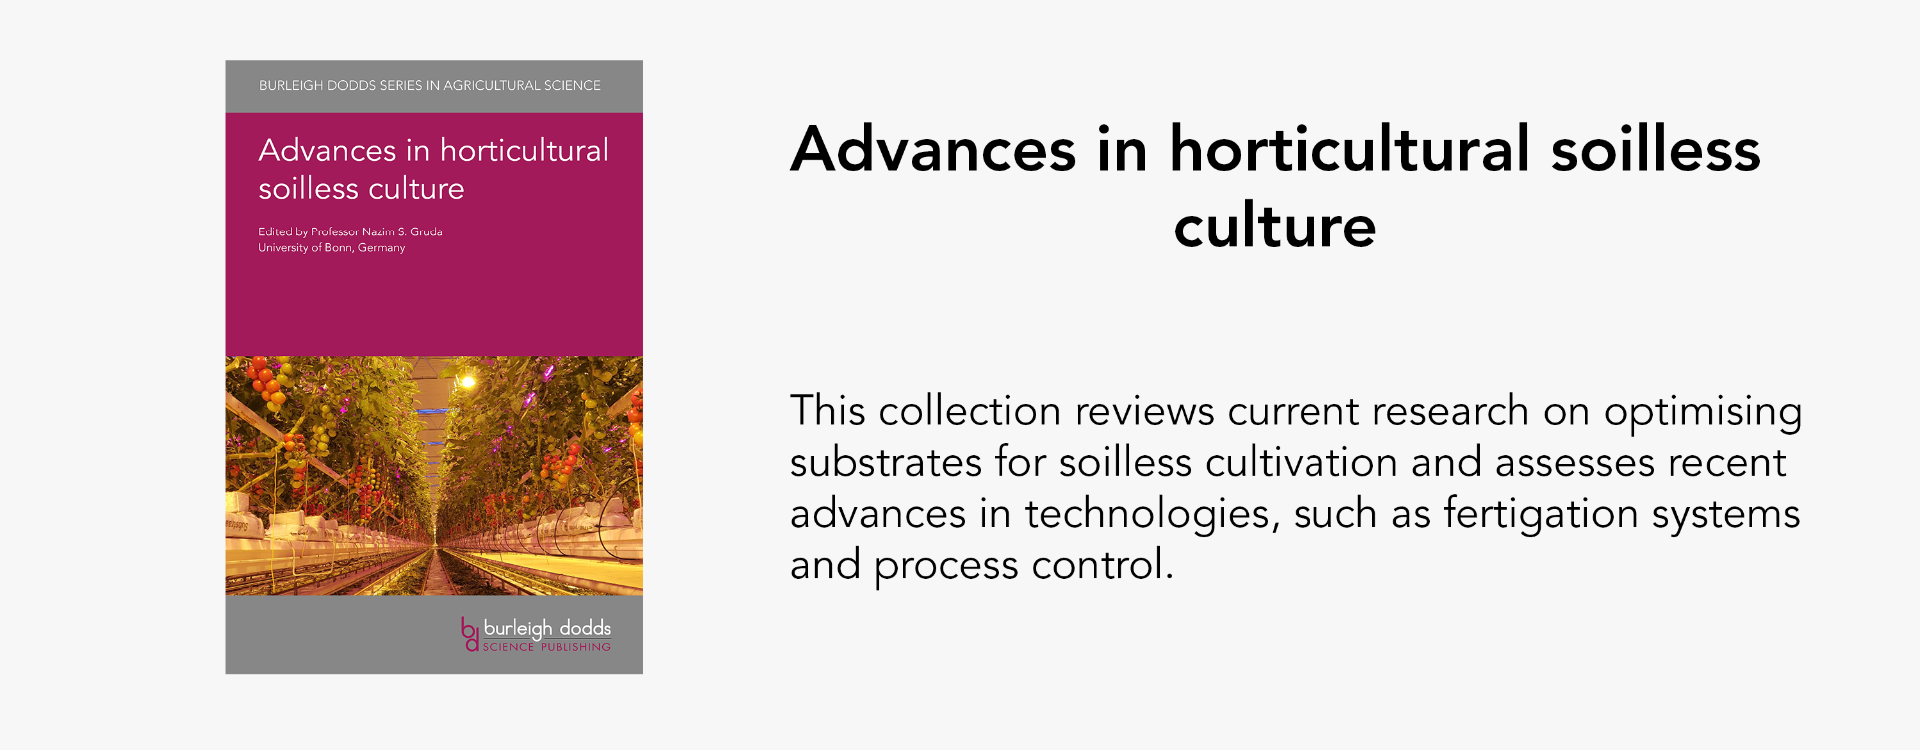 Advances in horticultural soilless culture